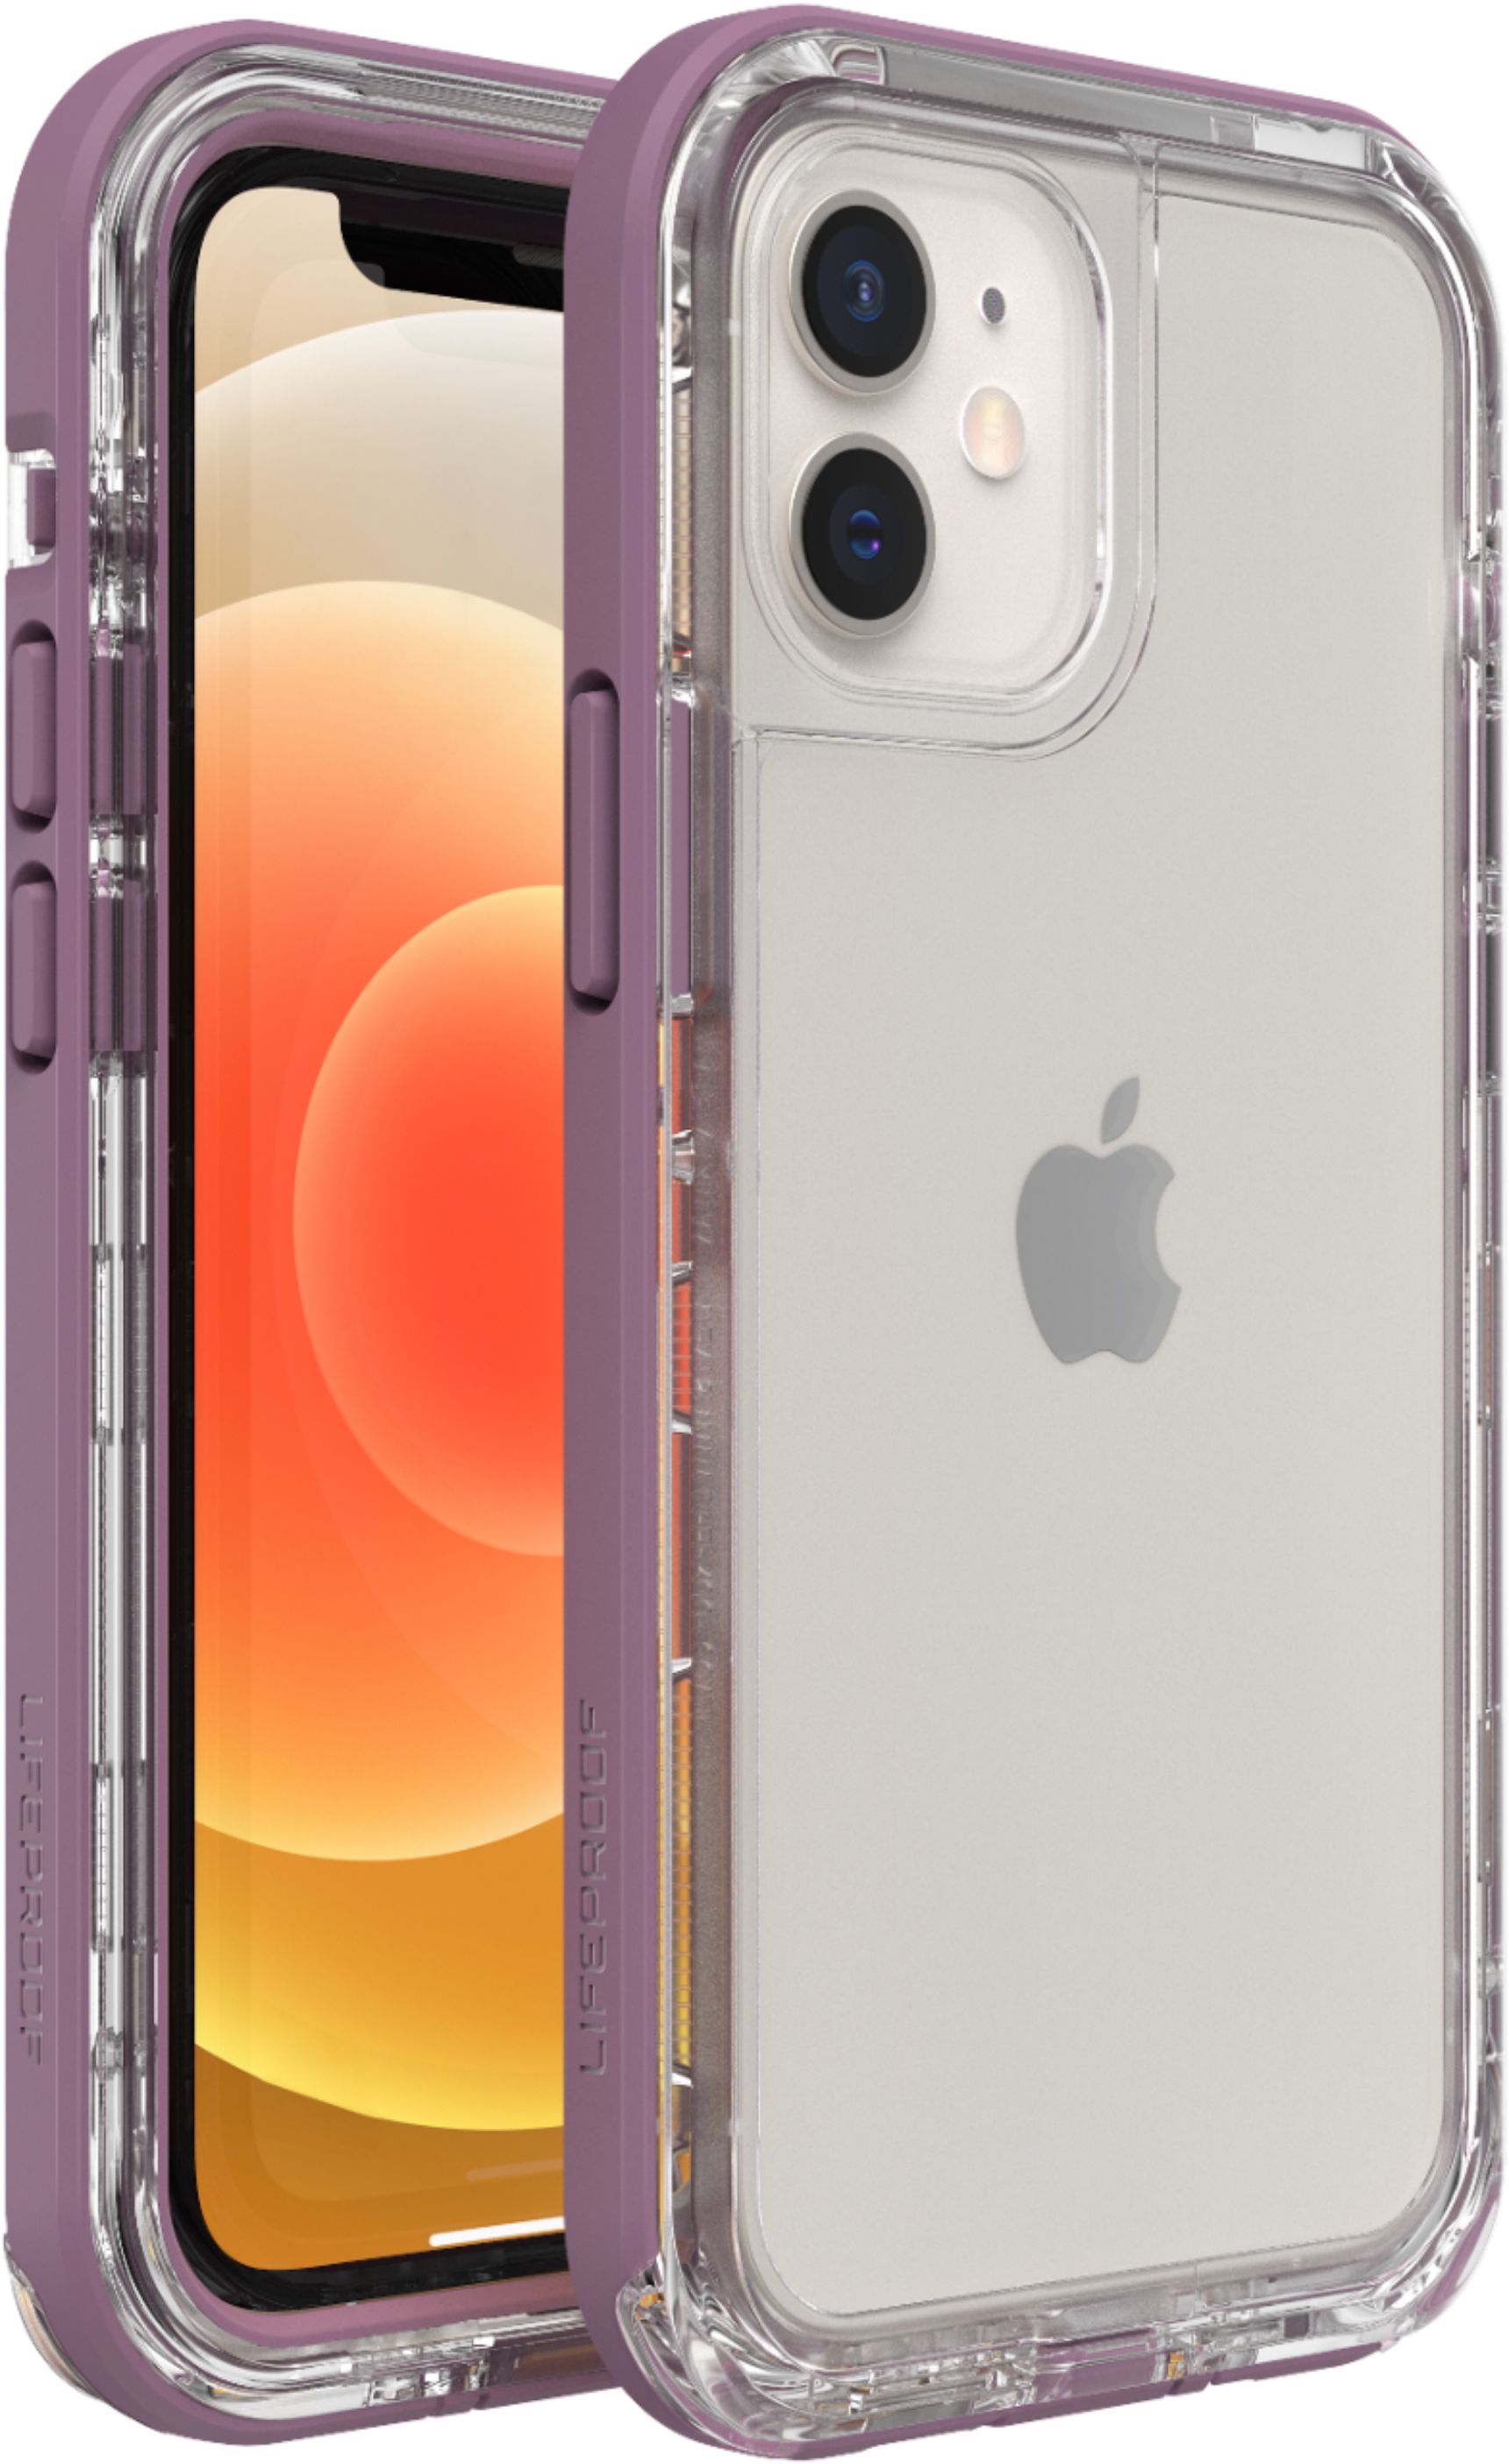 Angle View: UAG - Civilian Hard shell Case for Apple iPhone 12 Mini - Eggplant